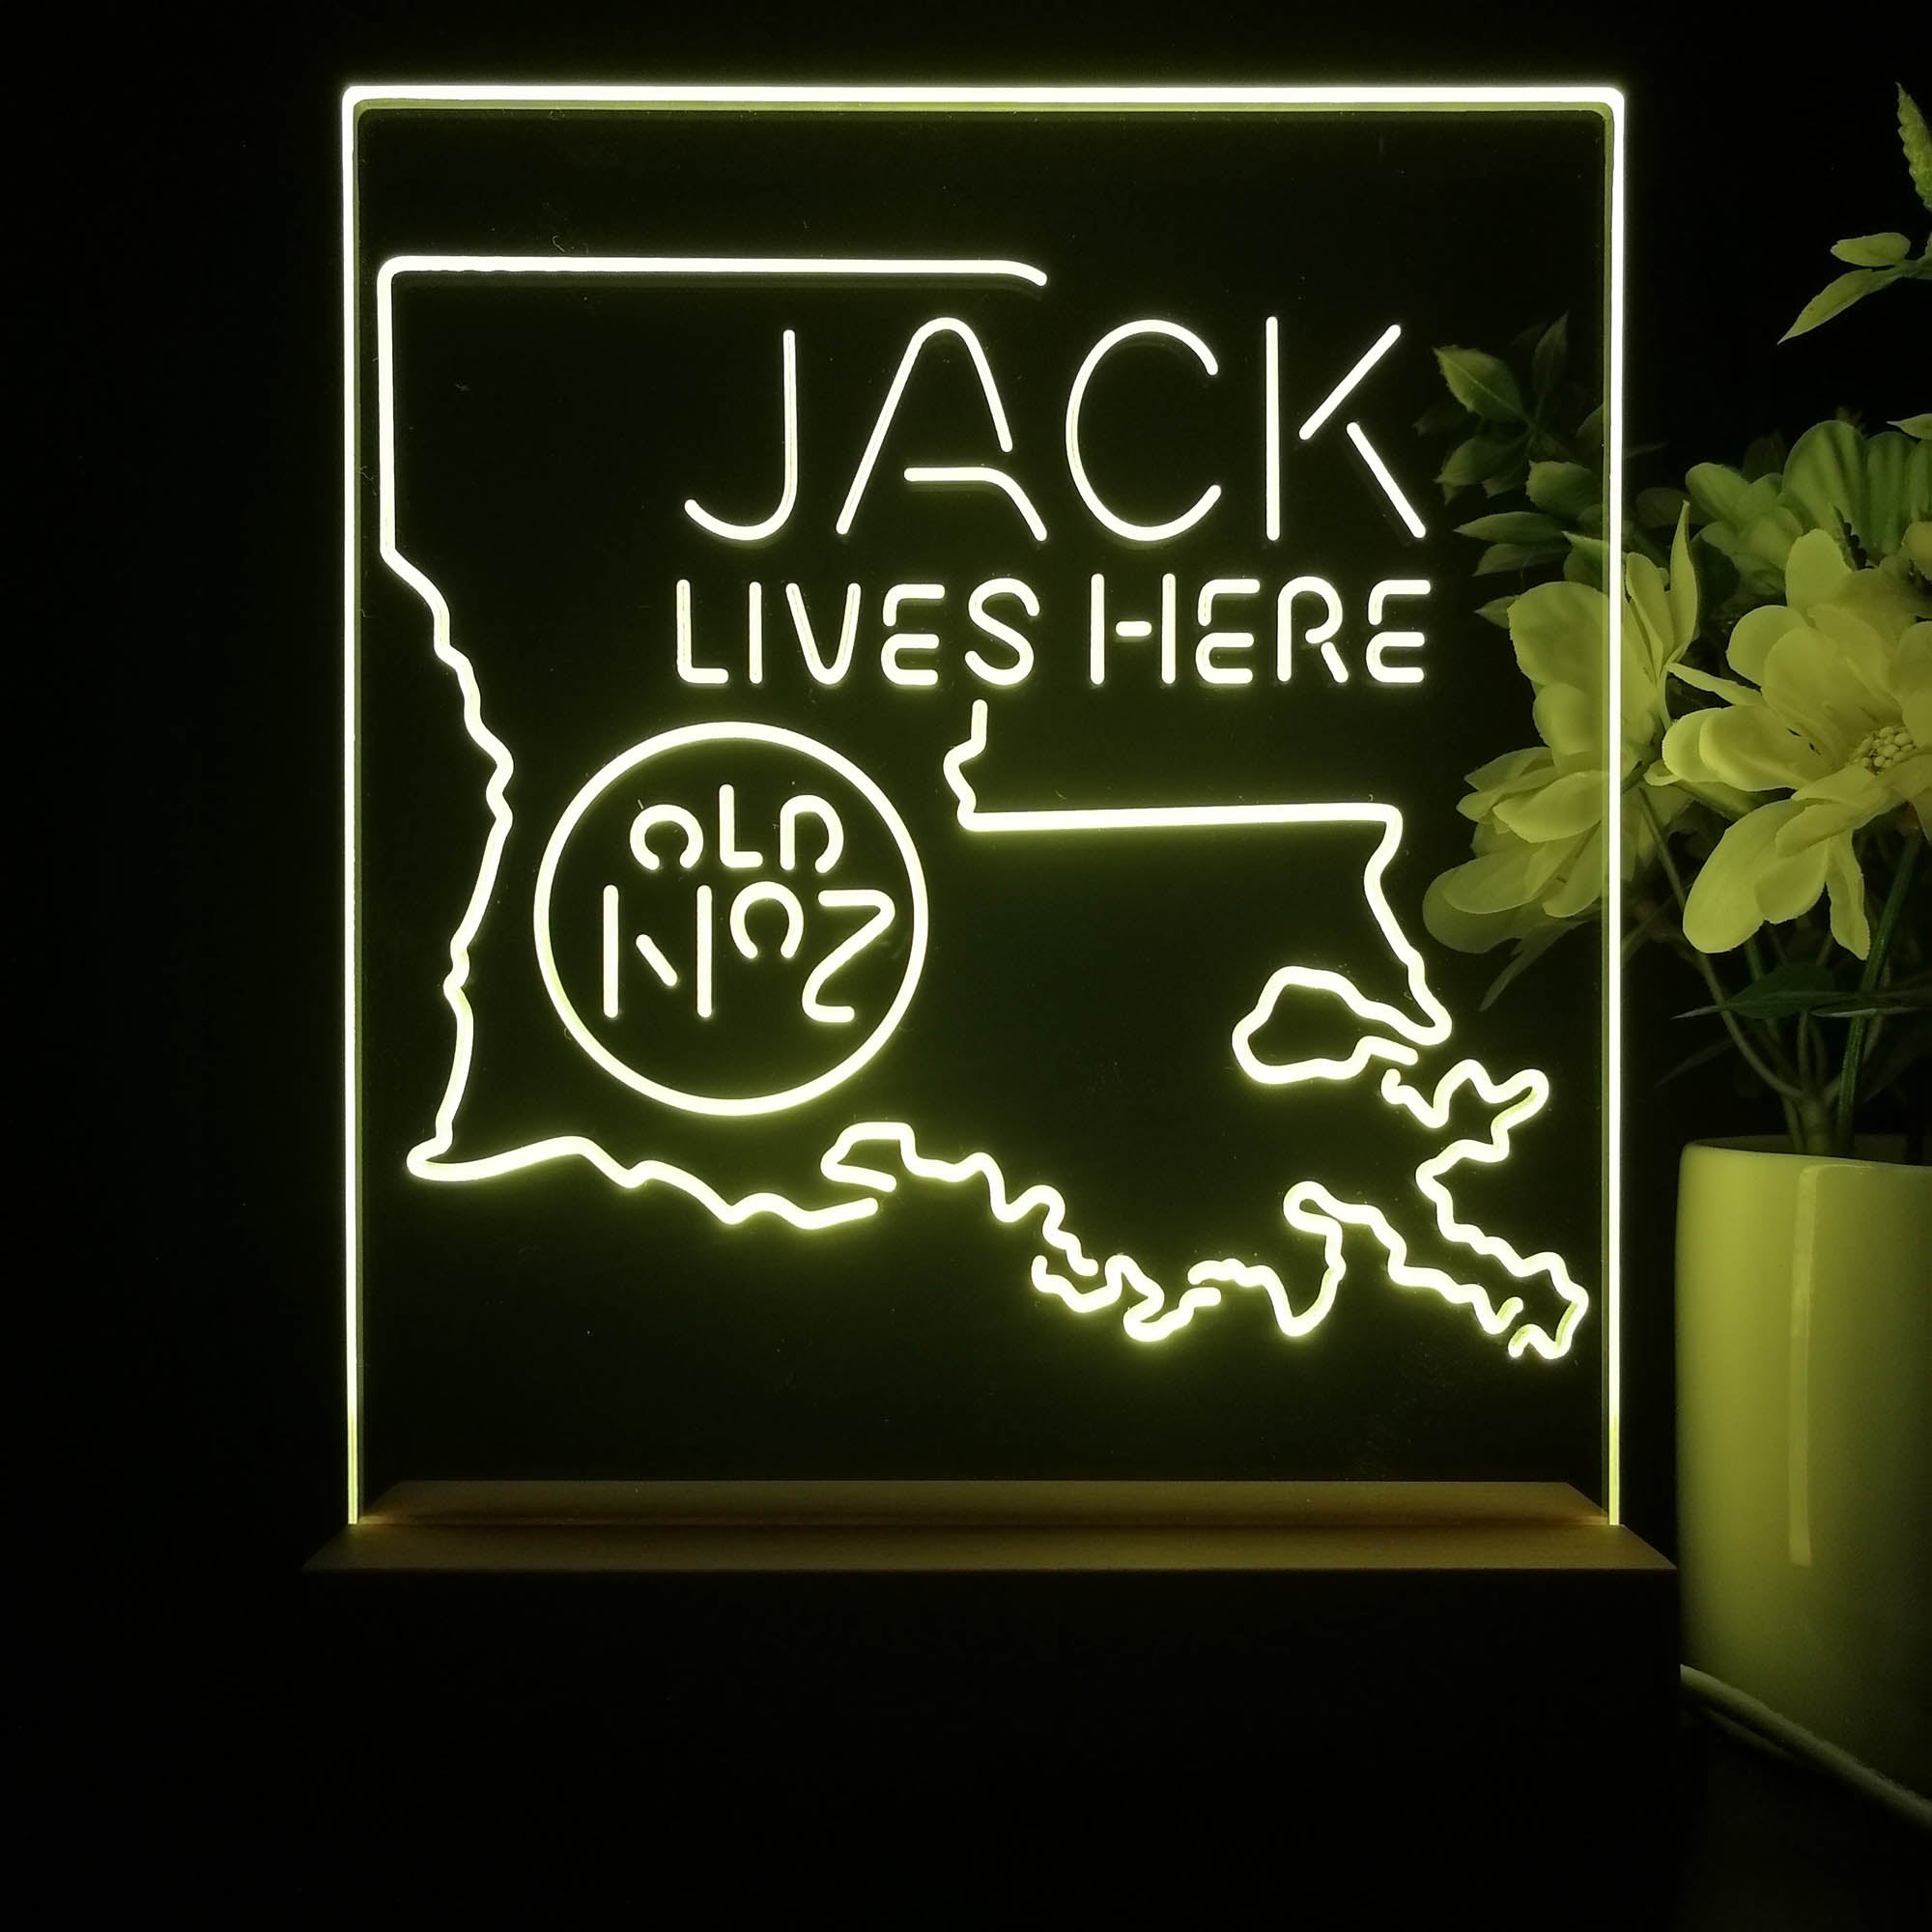 Louisiana Jack Lives Here 3D Illusion Night Light Desk Lamp